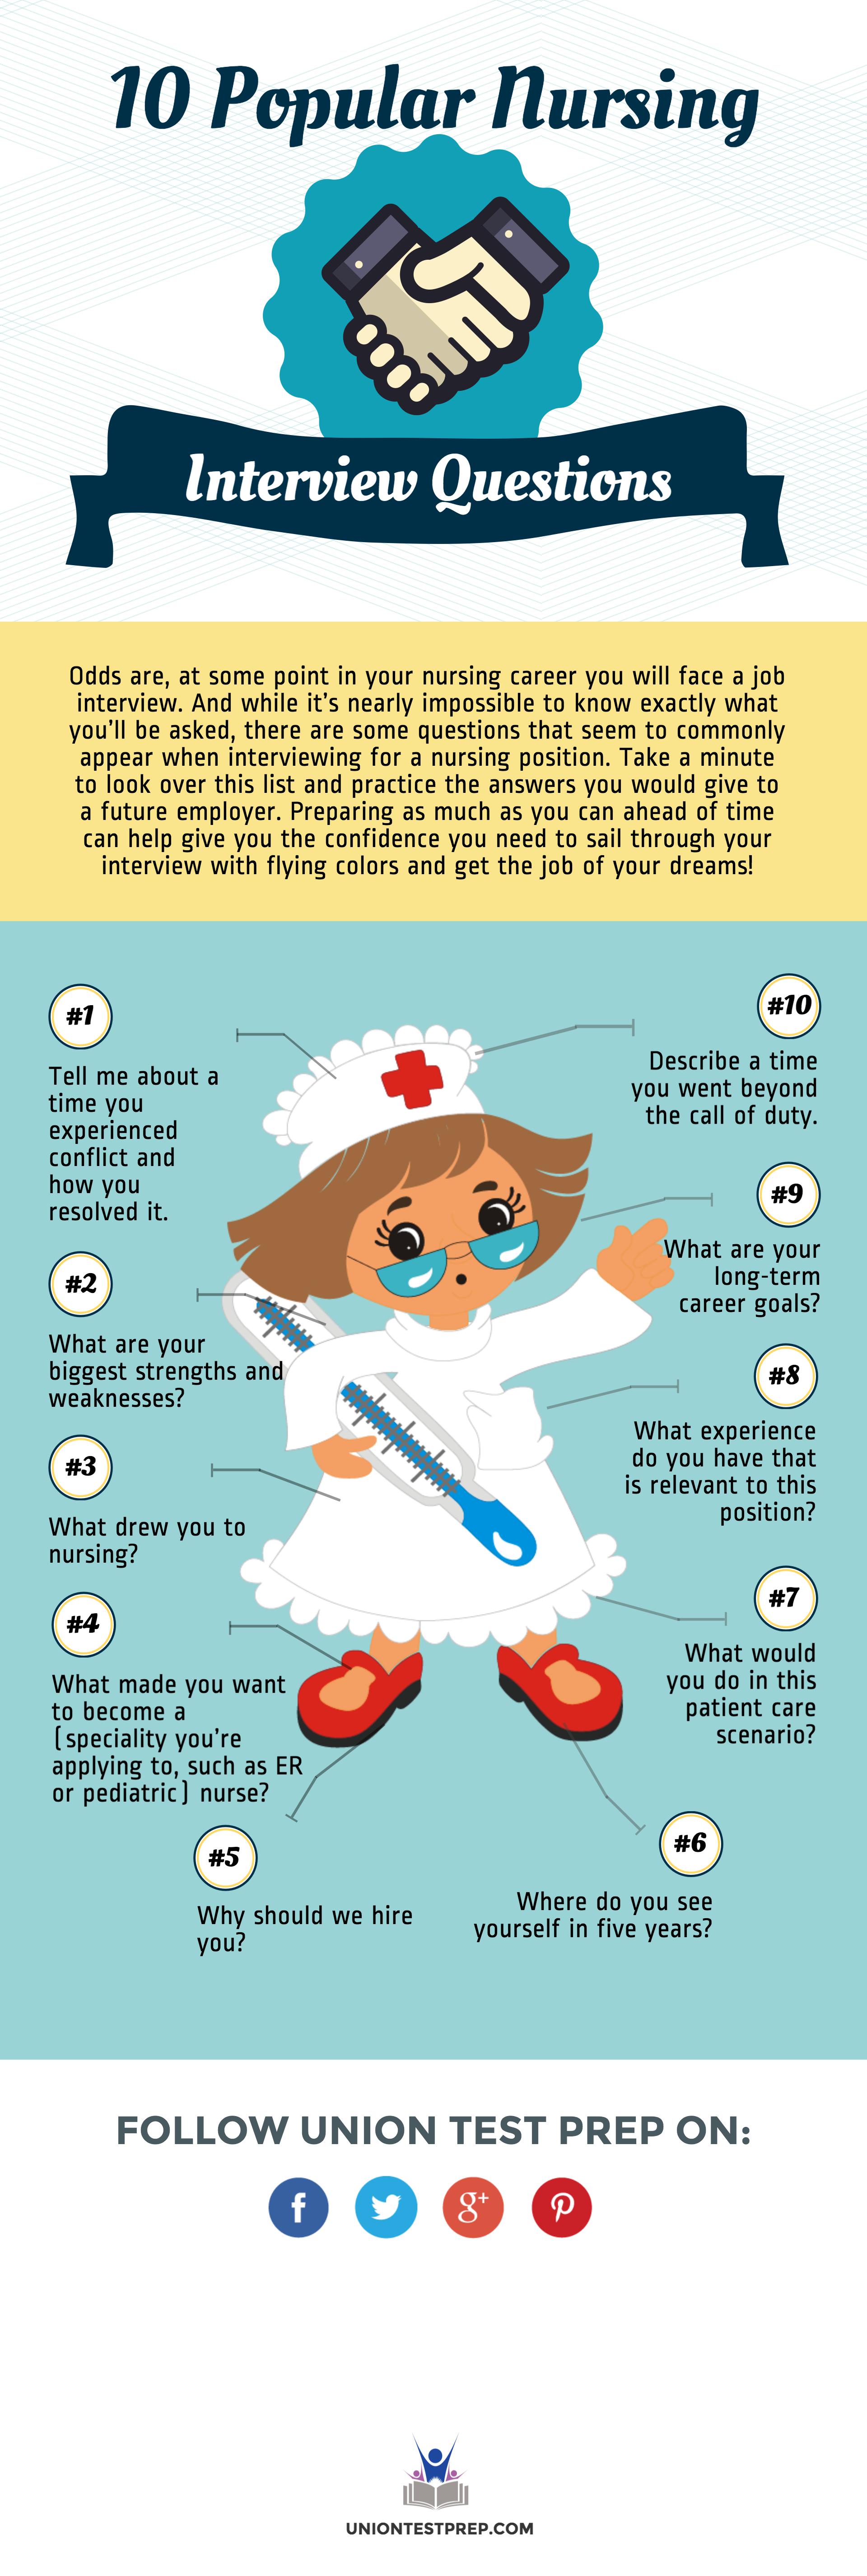 10 Popular Nursing Interview Questions